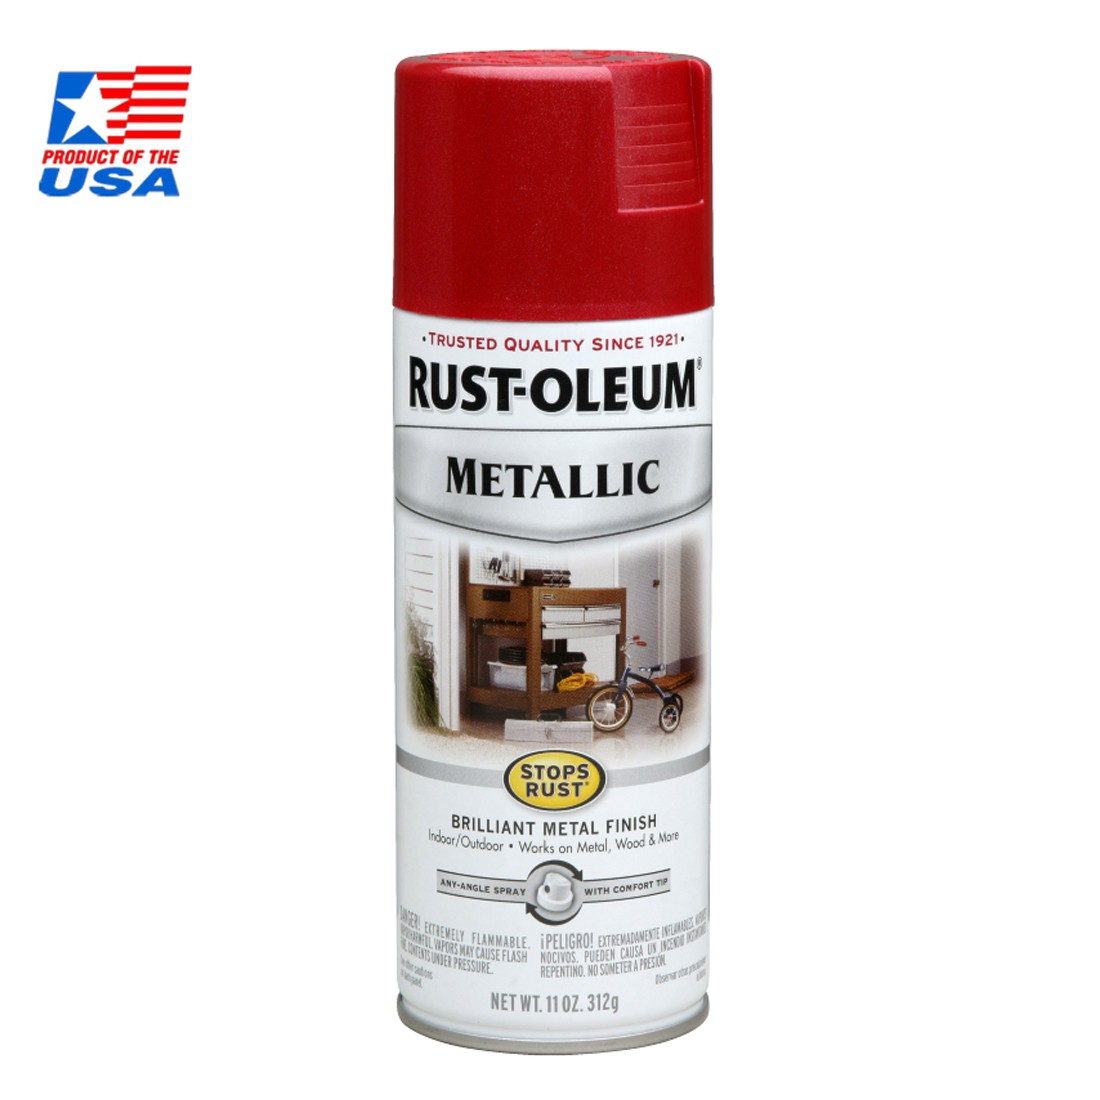 Rust Oleum Metallic Spray - Rust Protection สีสเปรย์ กันสนิม เมทัลลิค Apple Red